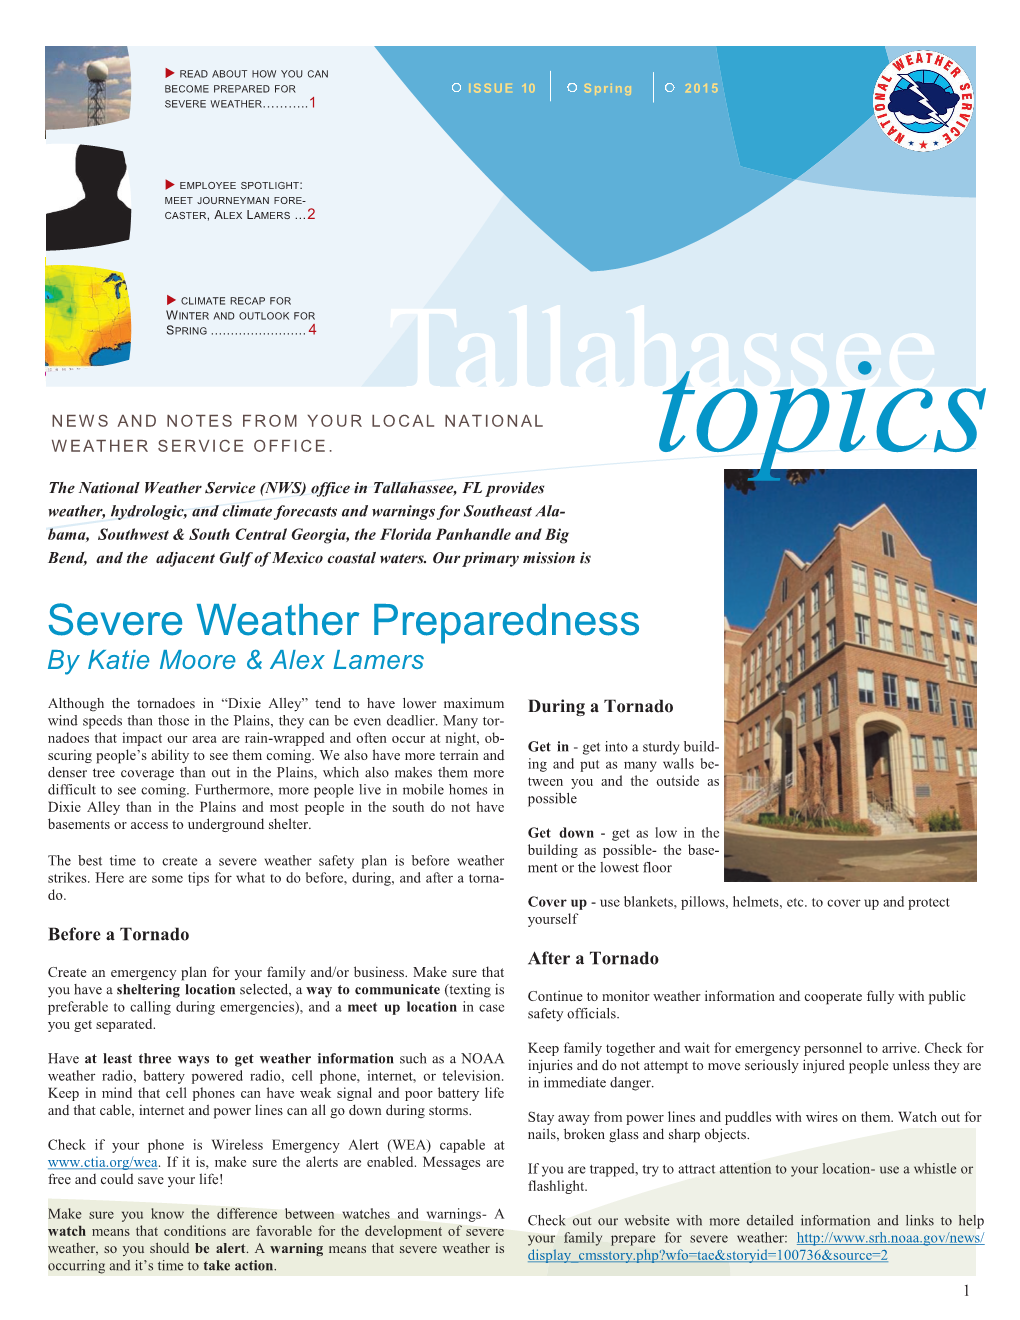 Severe Weather Preparedness by Katie Moore & Alex Lamers